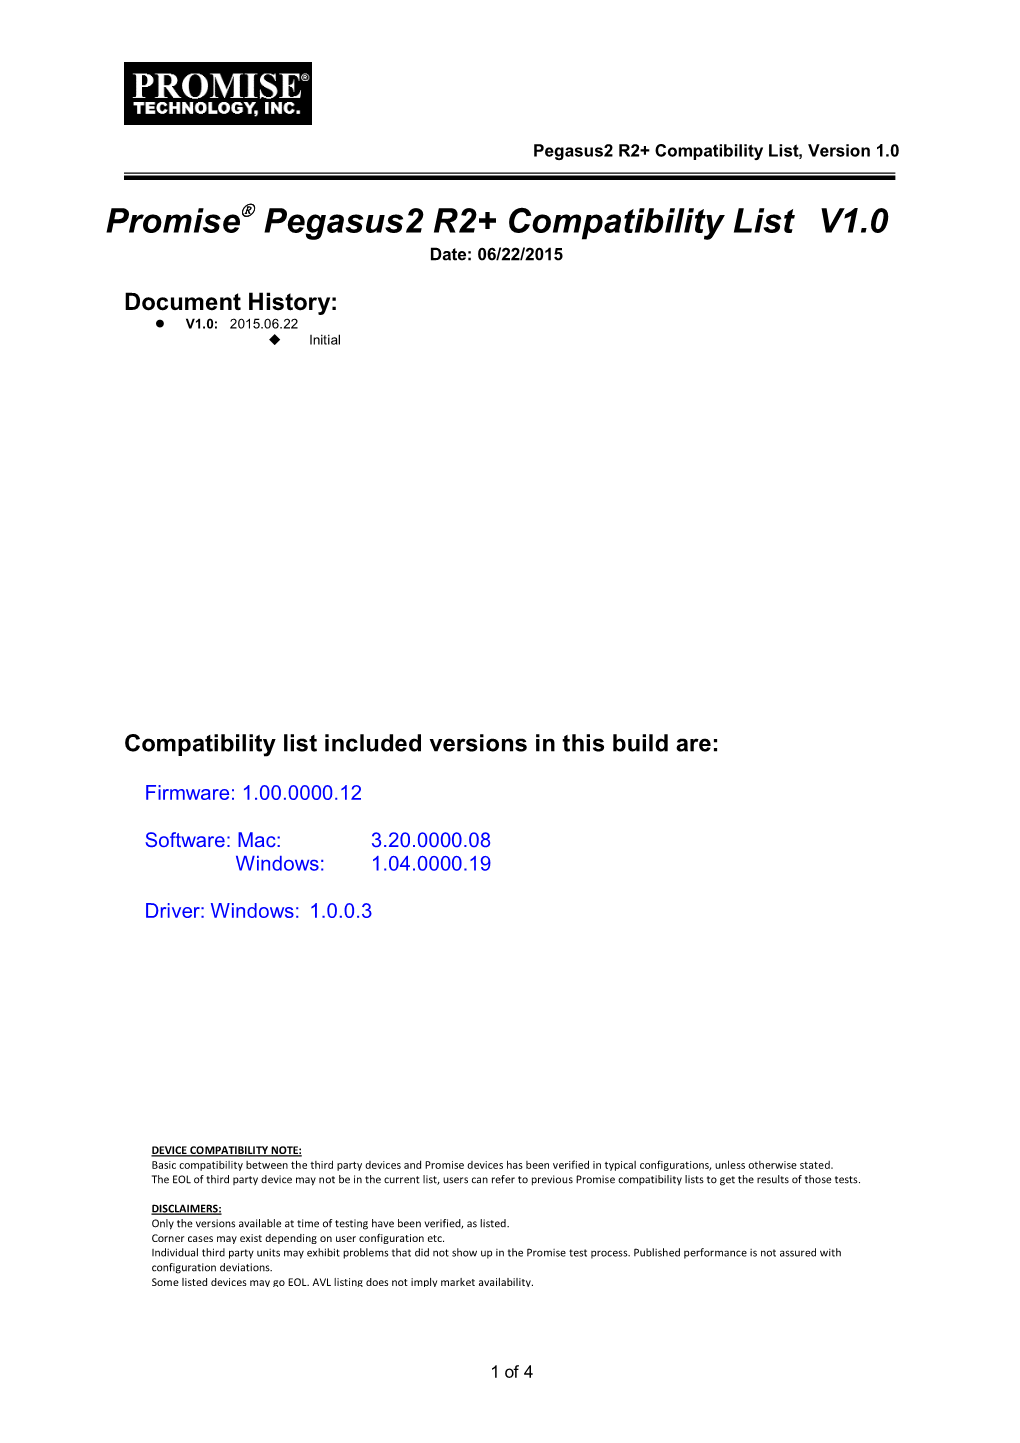 Promise Pegasus2 R2+ Compatibility List V1.0 Date: 06/22/2015